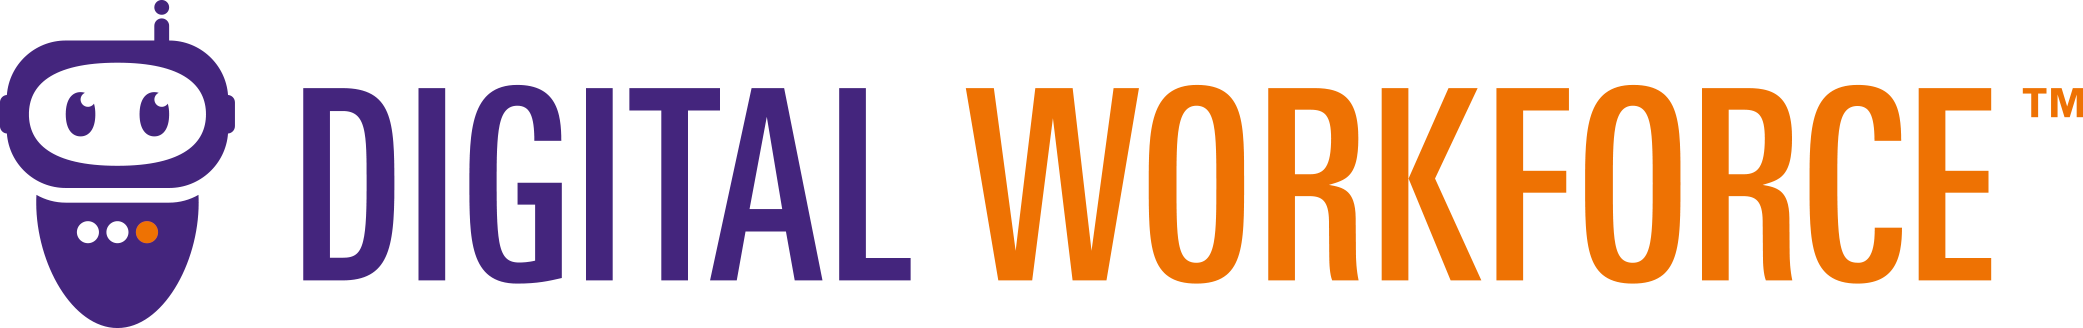 DigitalWorkforce1-logo-CMYK.png